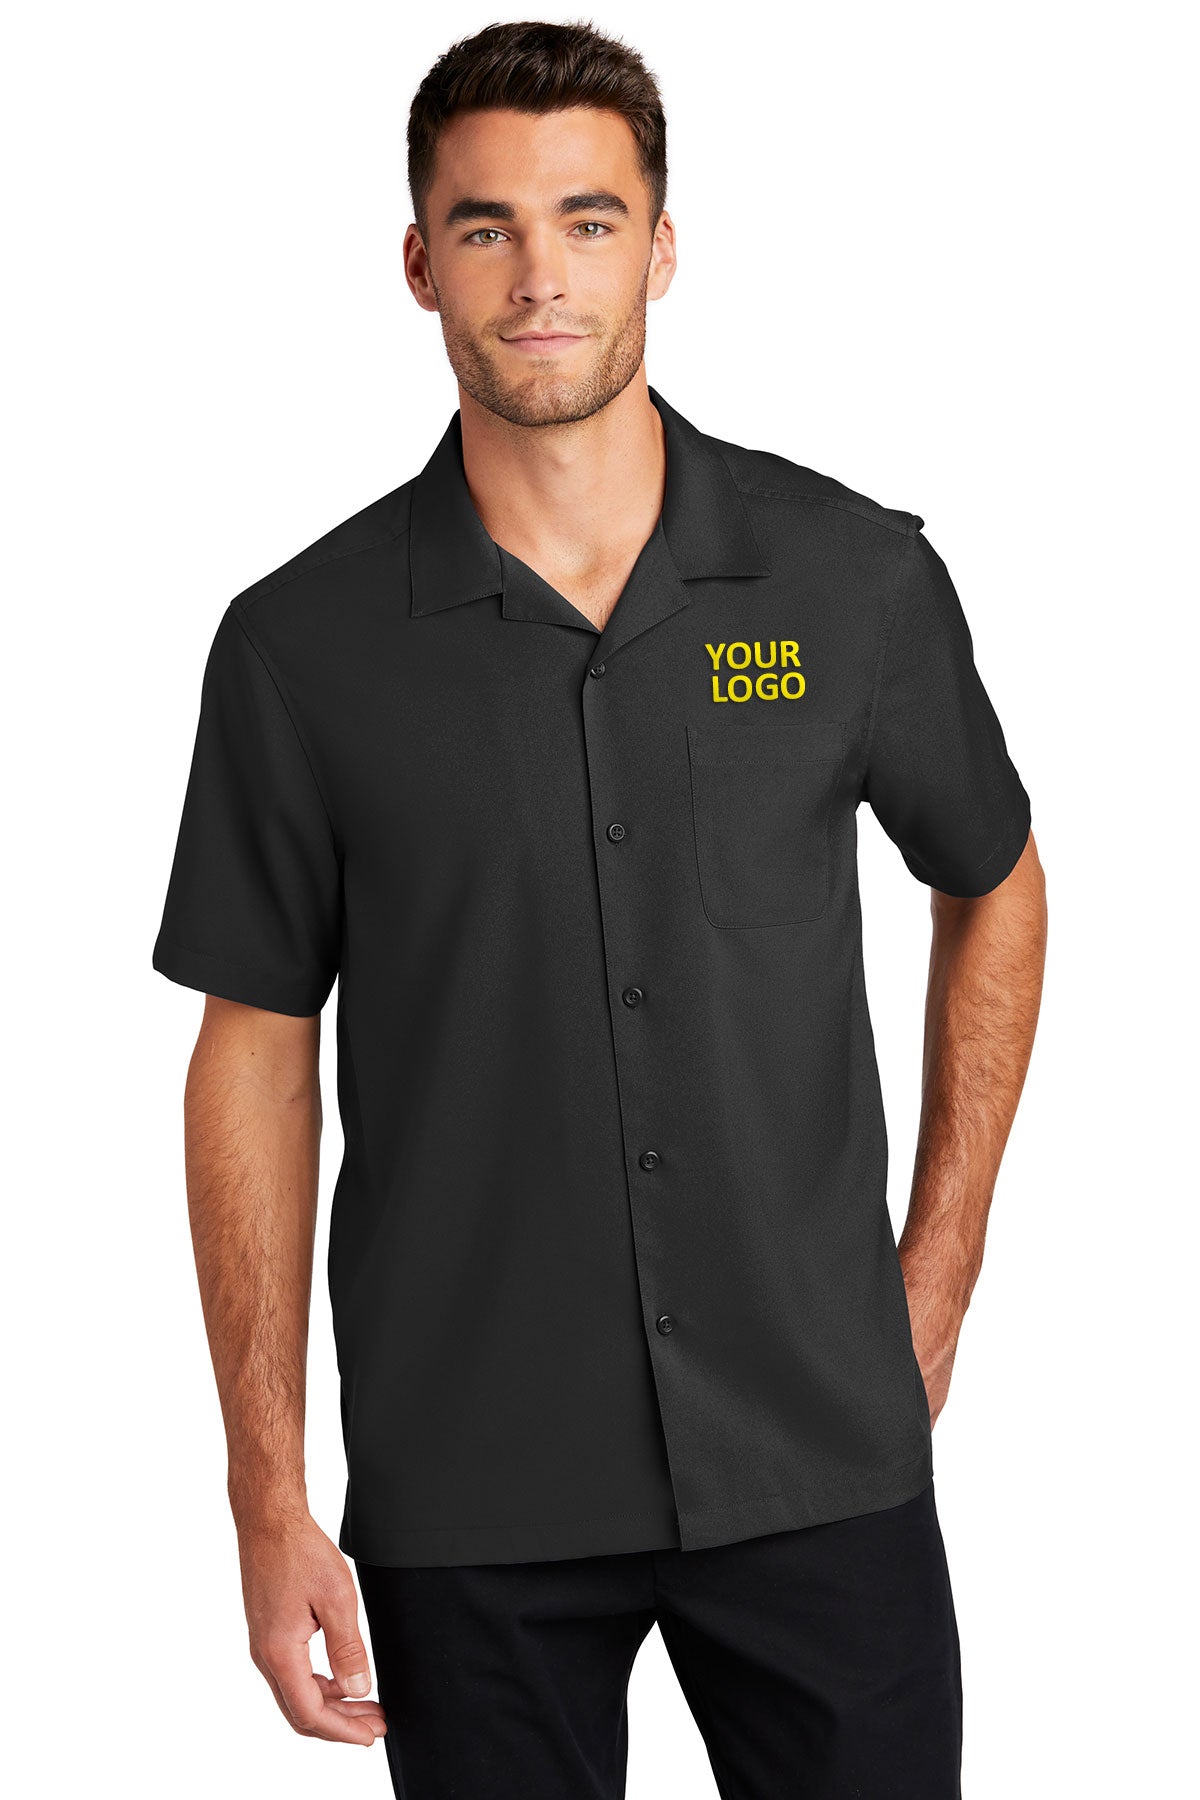 Port Authority Black W400 logo shirts